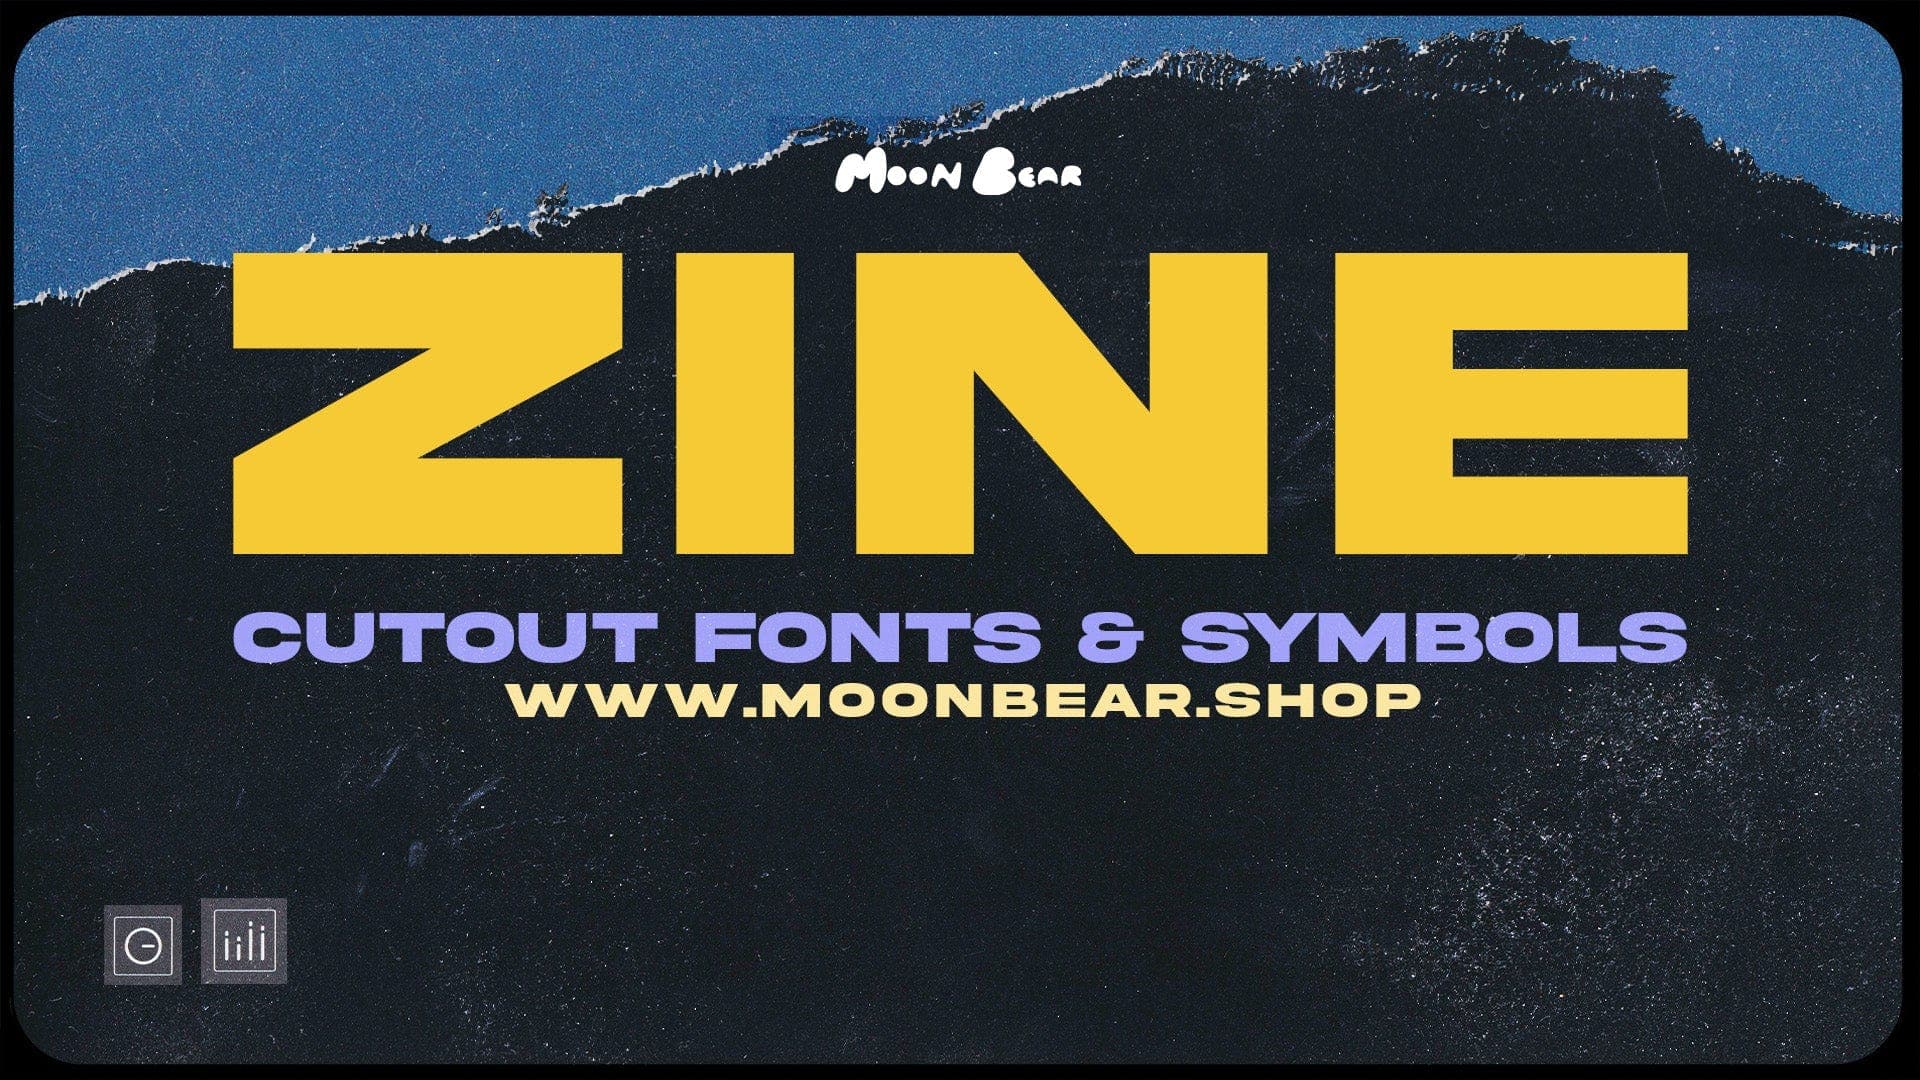 ZINE - Cutout Text & Symbols - moonbear.shop